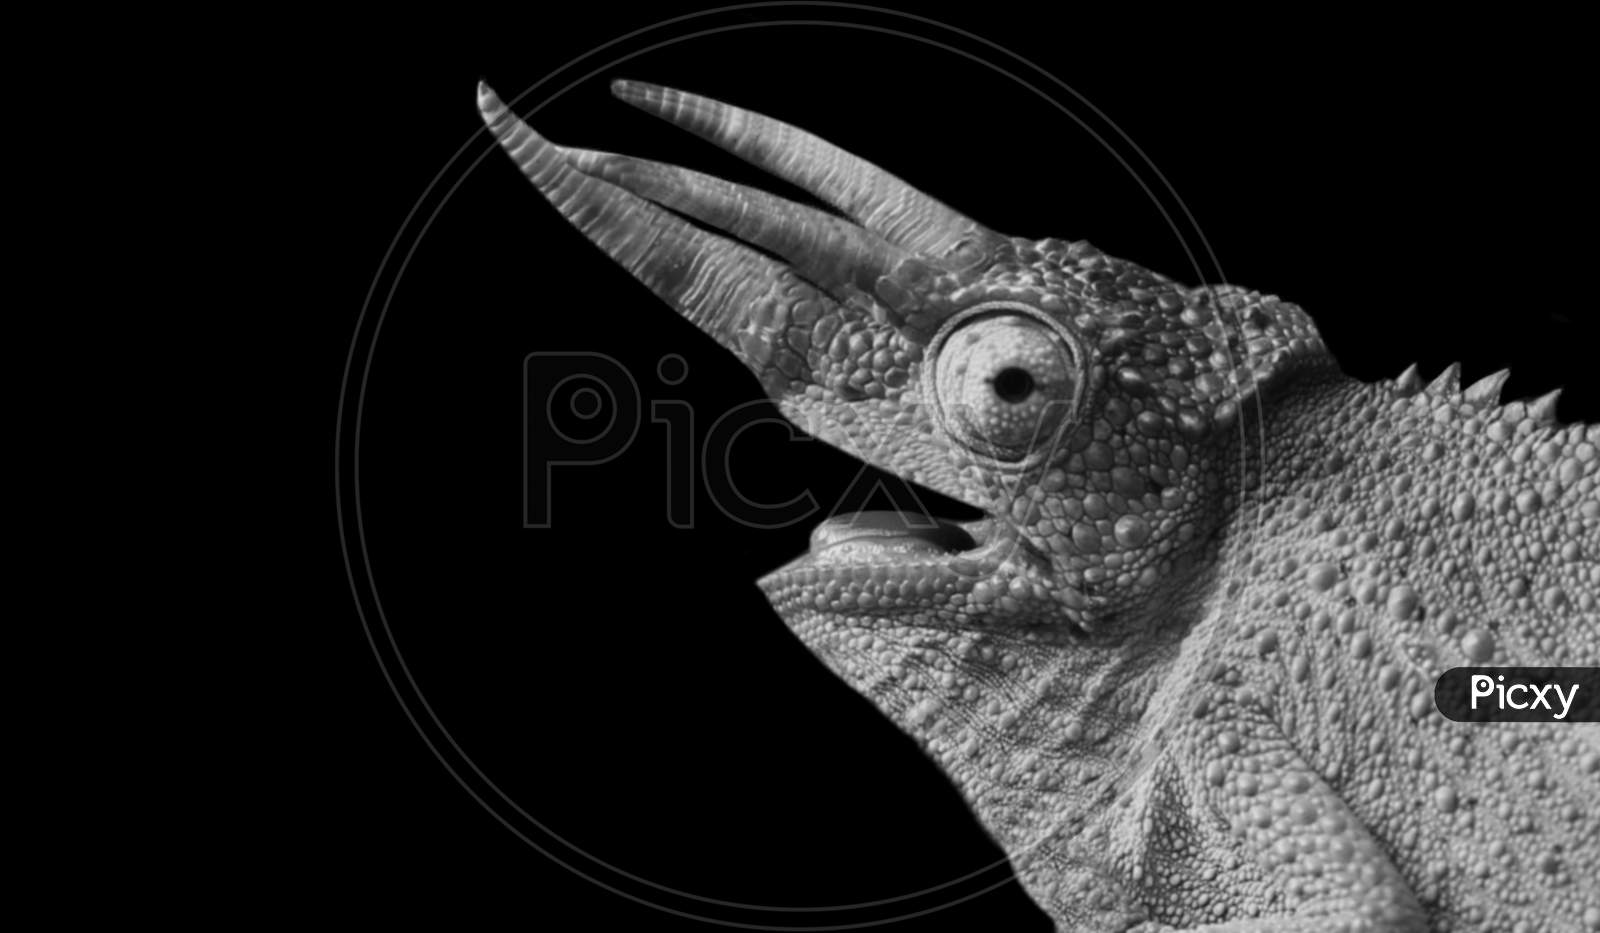 Black And White Three Horned Chameleon Face On The Black Background